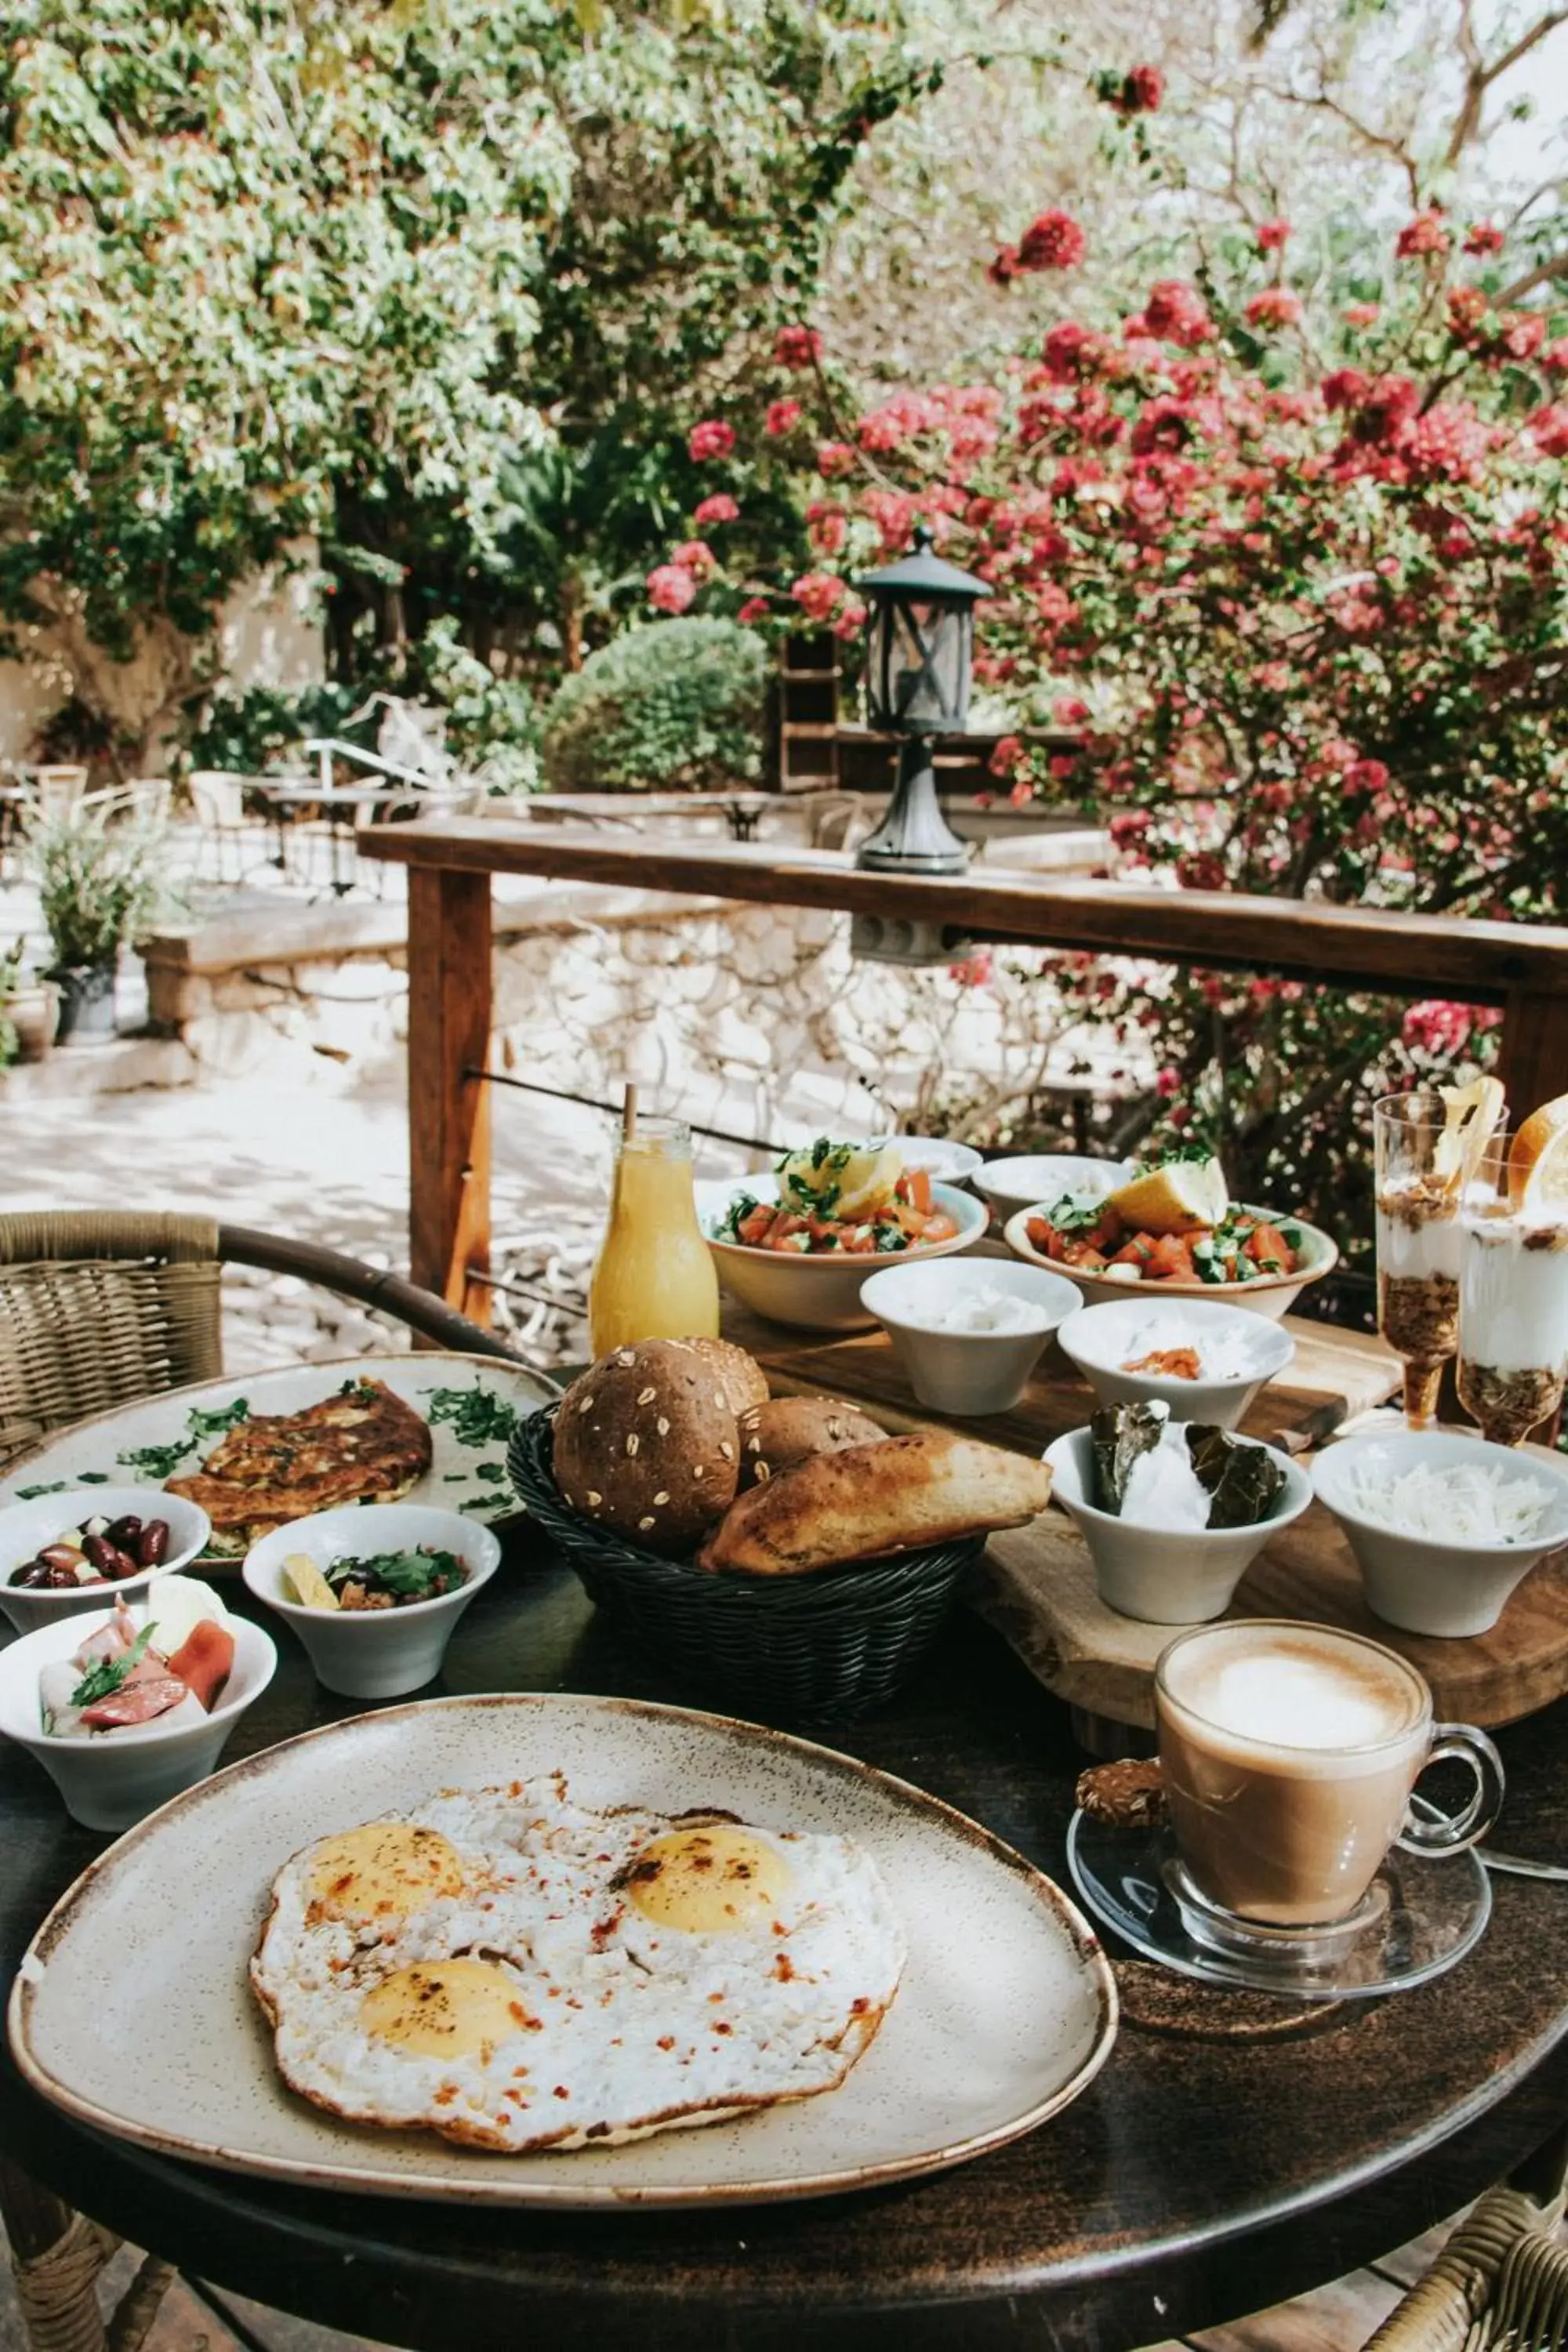 Food close-up in Ein Gedi Kibbutz Hotel